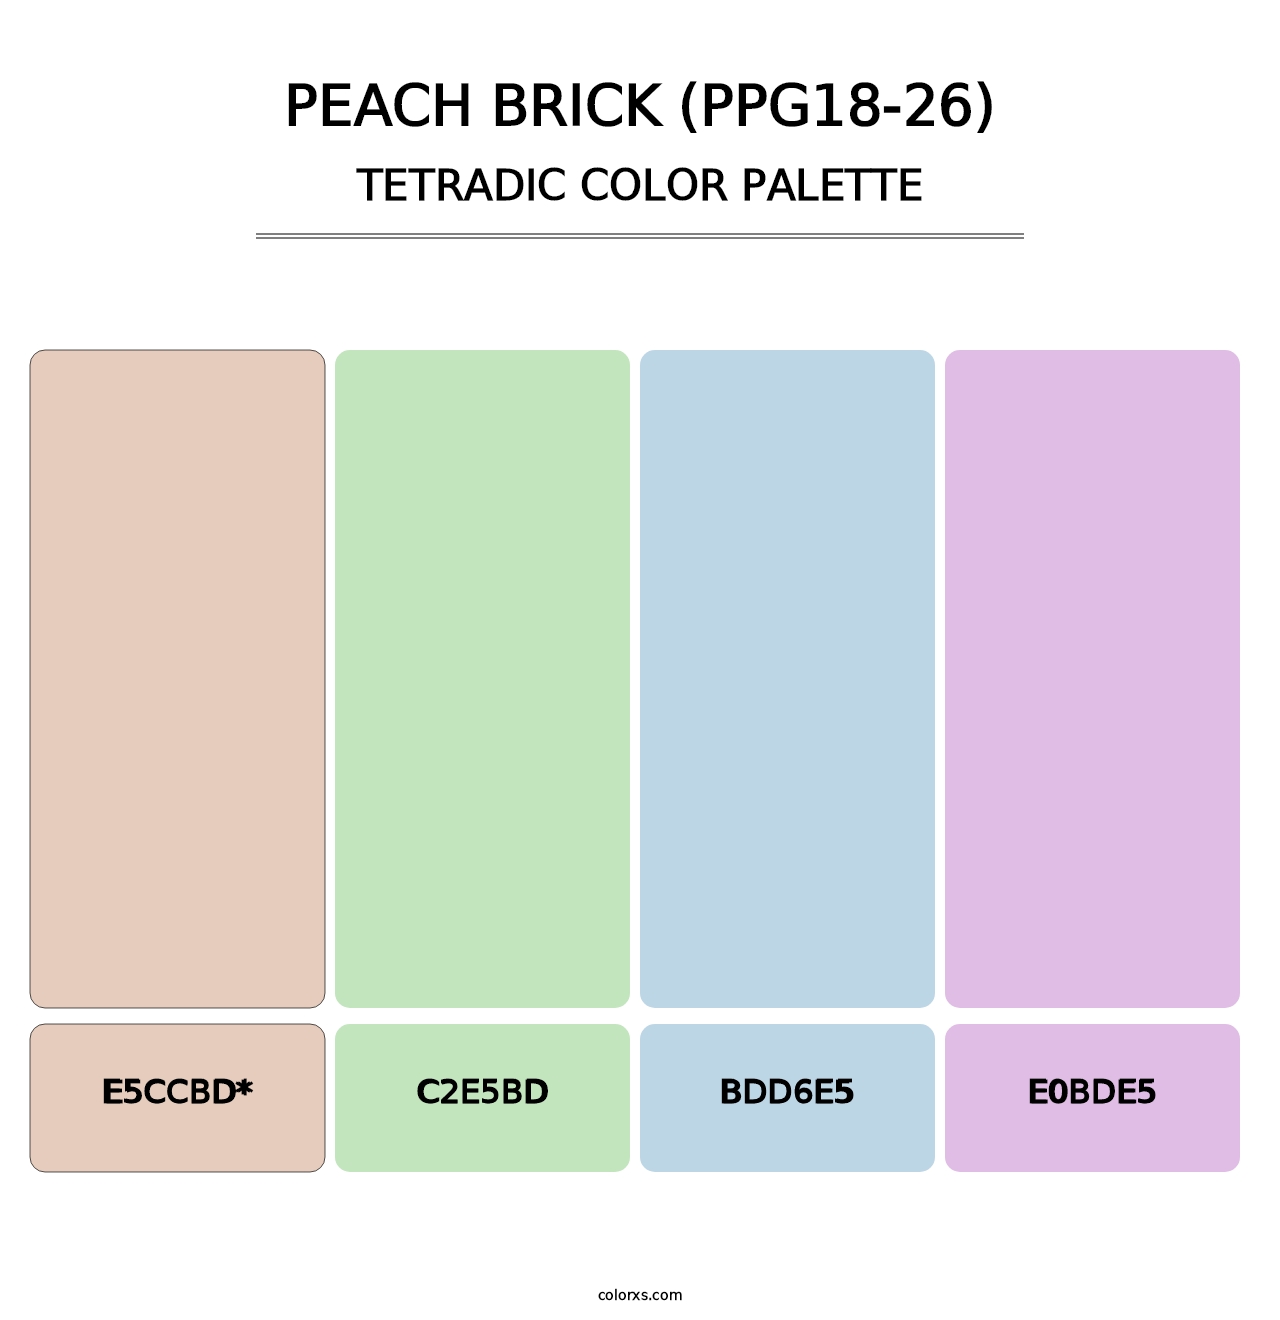 Peach Brick (PPG18-26) - Tetradic Color Palette